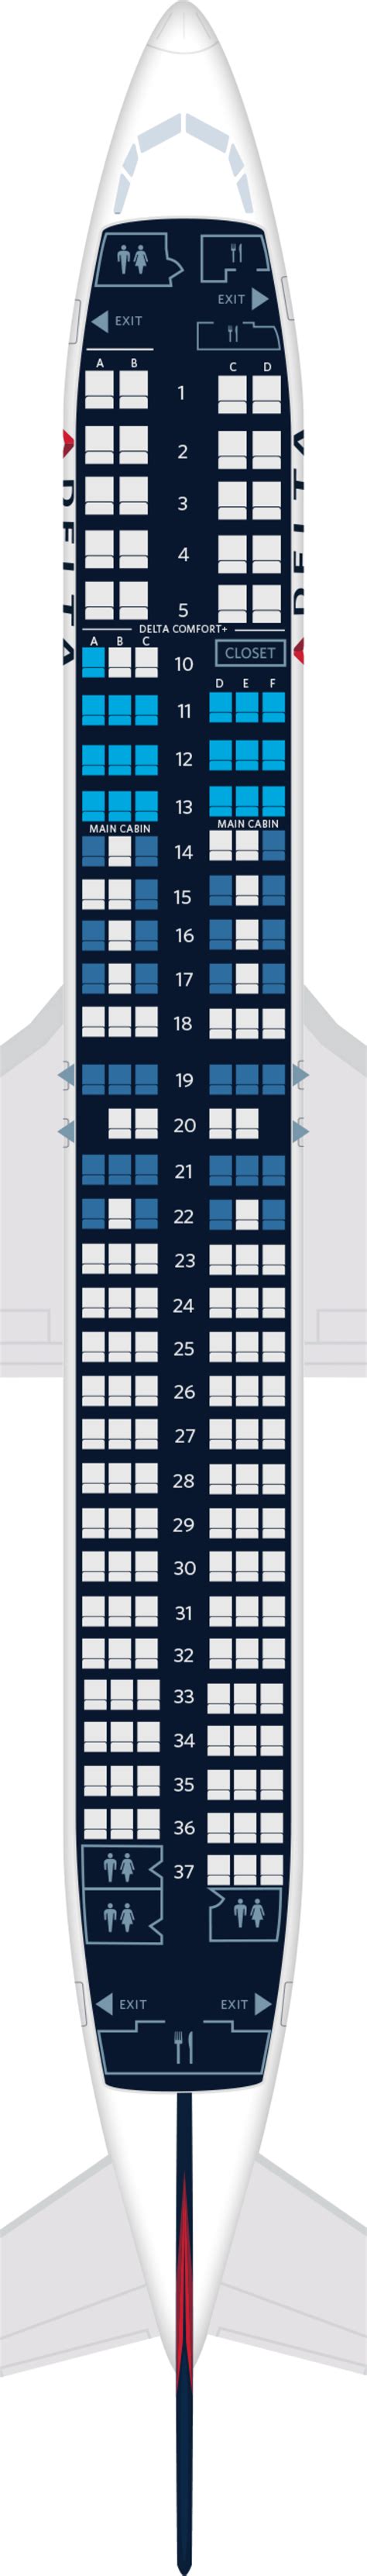 Boeing 737-900ER Seat Maps, Specs & Amenities | Delta Air Lines